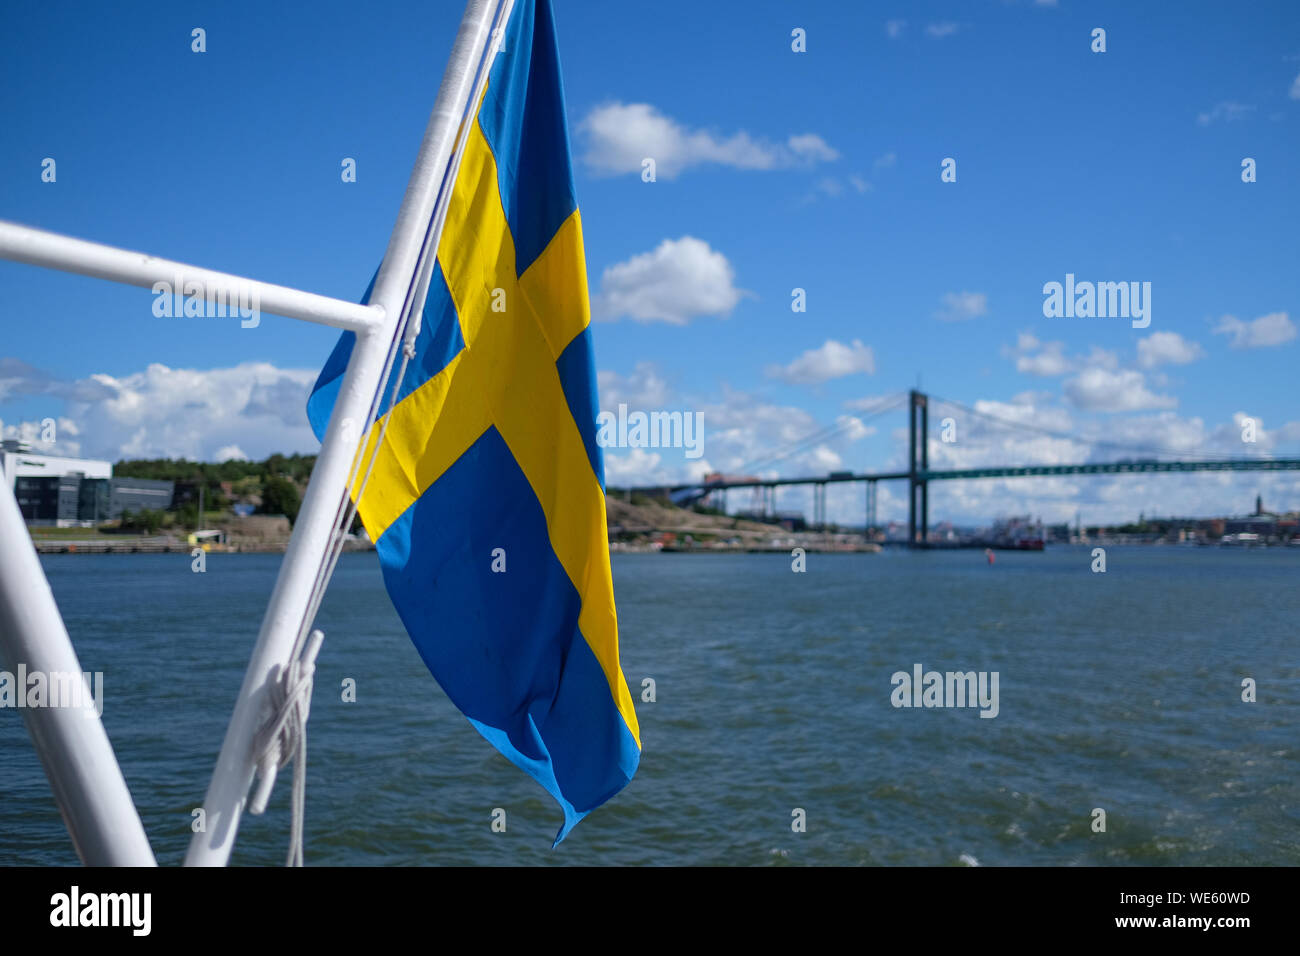 Swedish Flag In Boat Moving On River Against Bridge Stock Photo